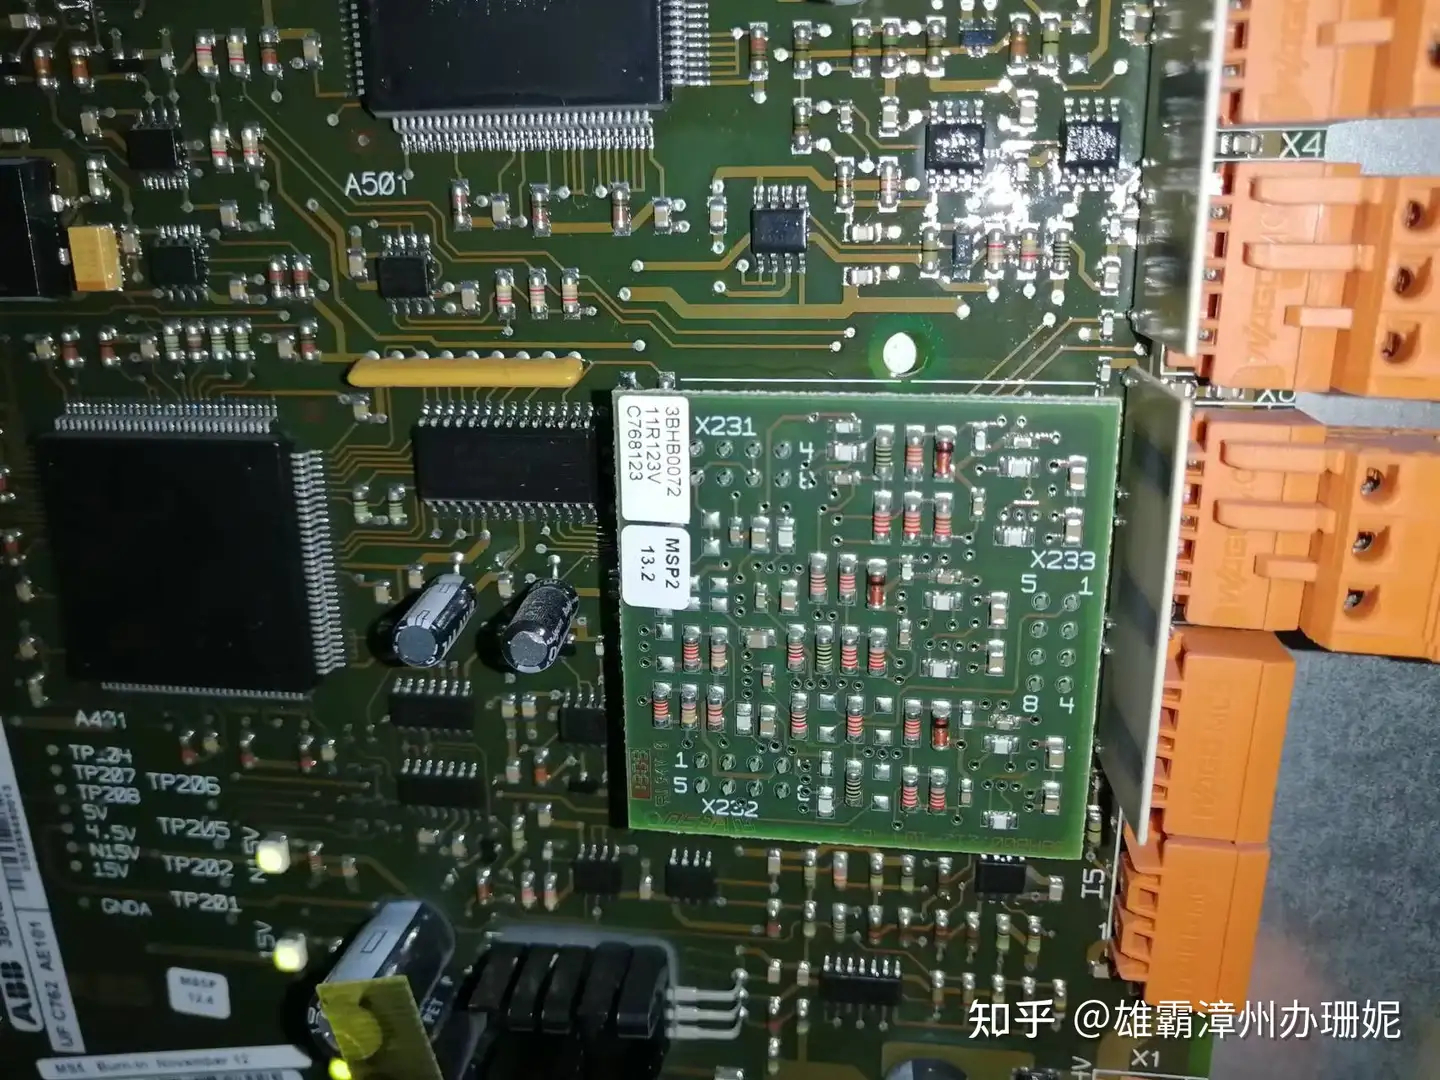 UFC762AE101 3BHE006412R0101变频器电路板用于ACS 6000变频器订货号 